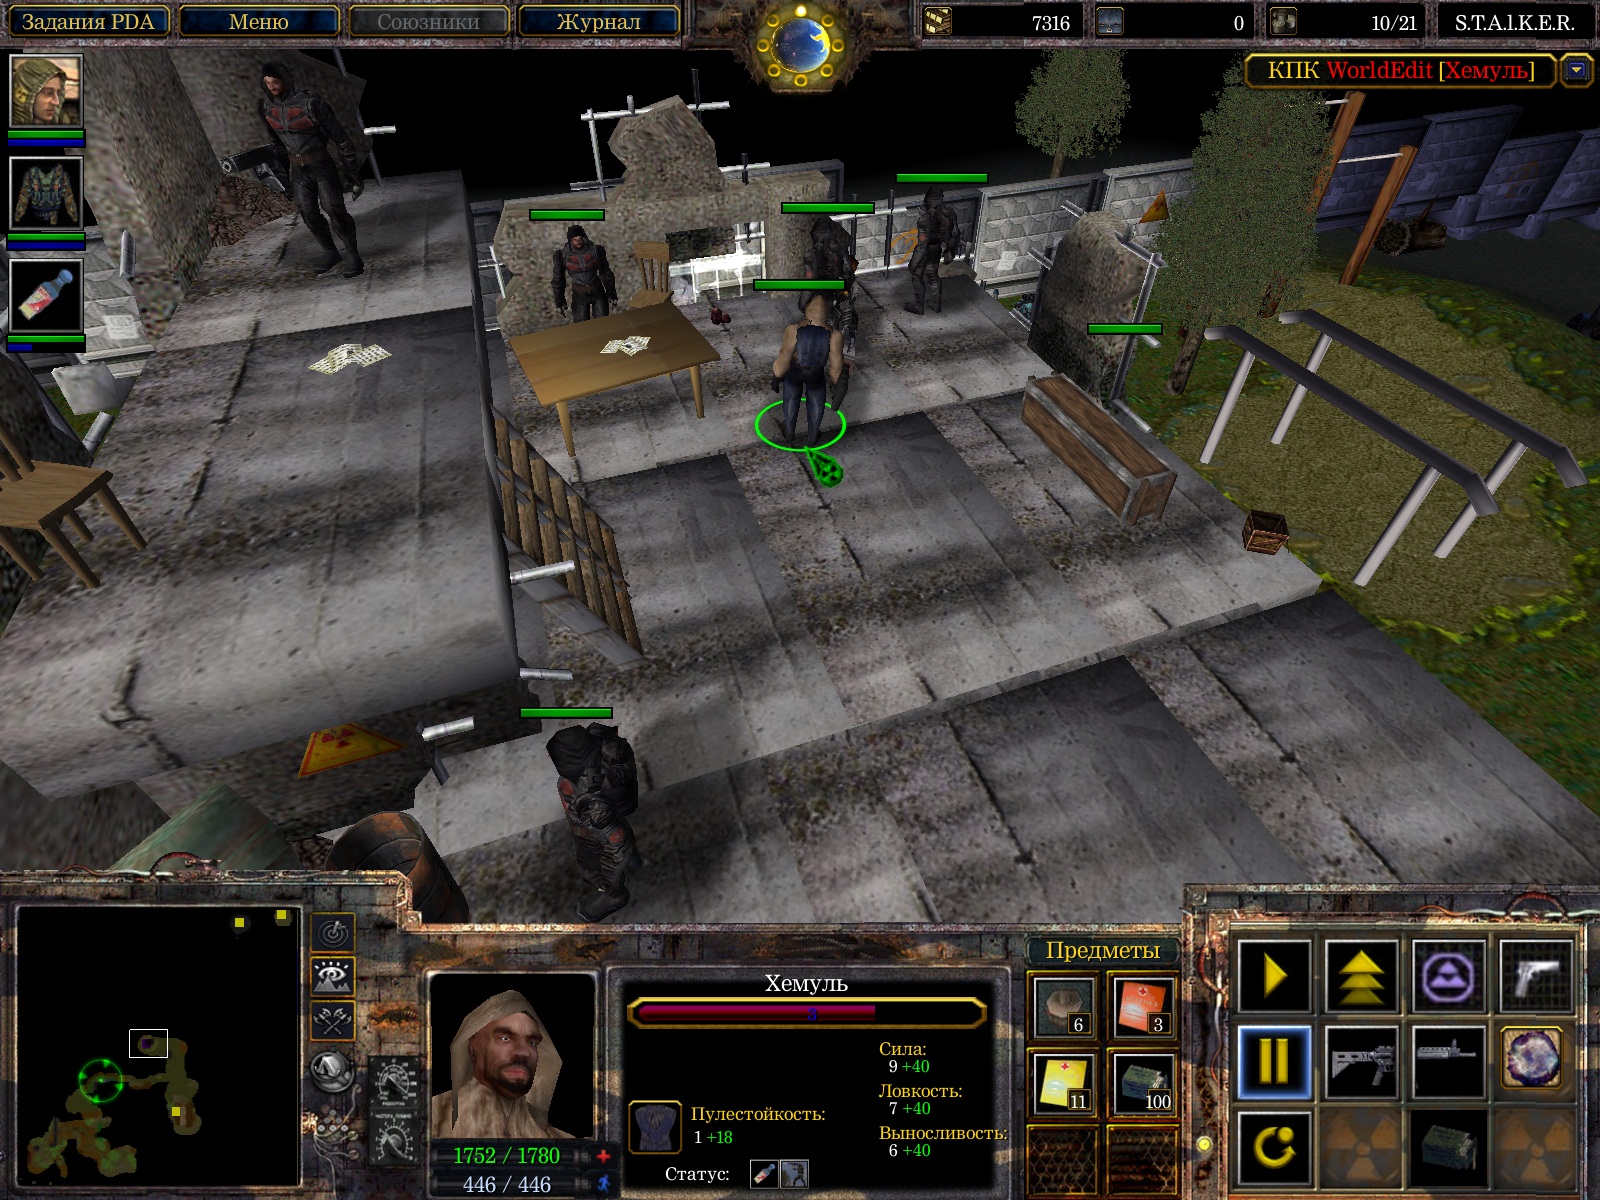 Игра сталкер мод андроид. Warcraft 3 Stalker. Карты для варкрафт 3 сталкер. Варкрафт 3 сталкер. Варкрафт 3 модели сталкер.